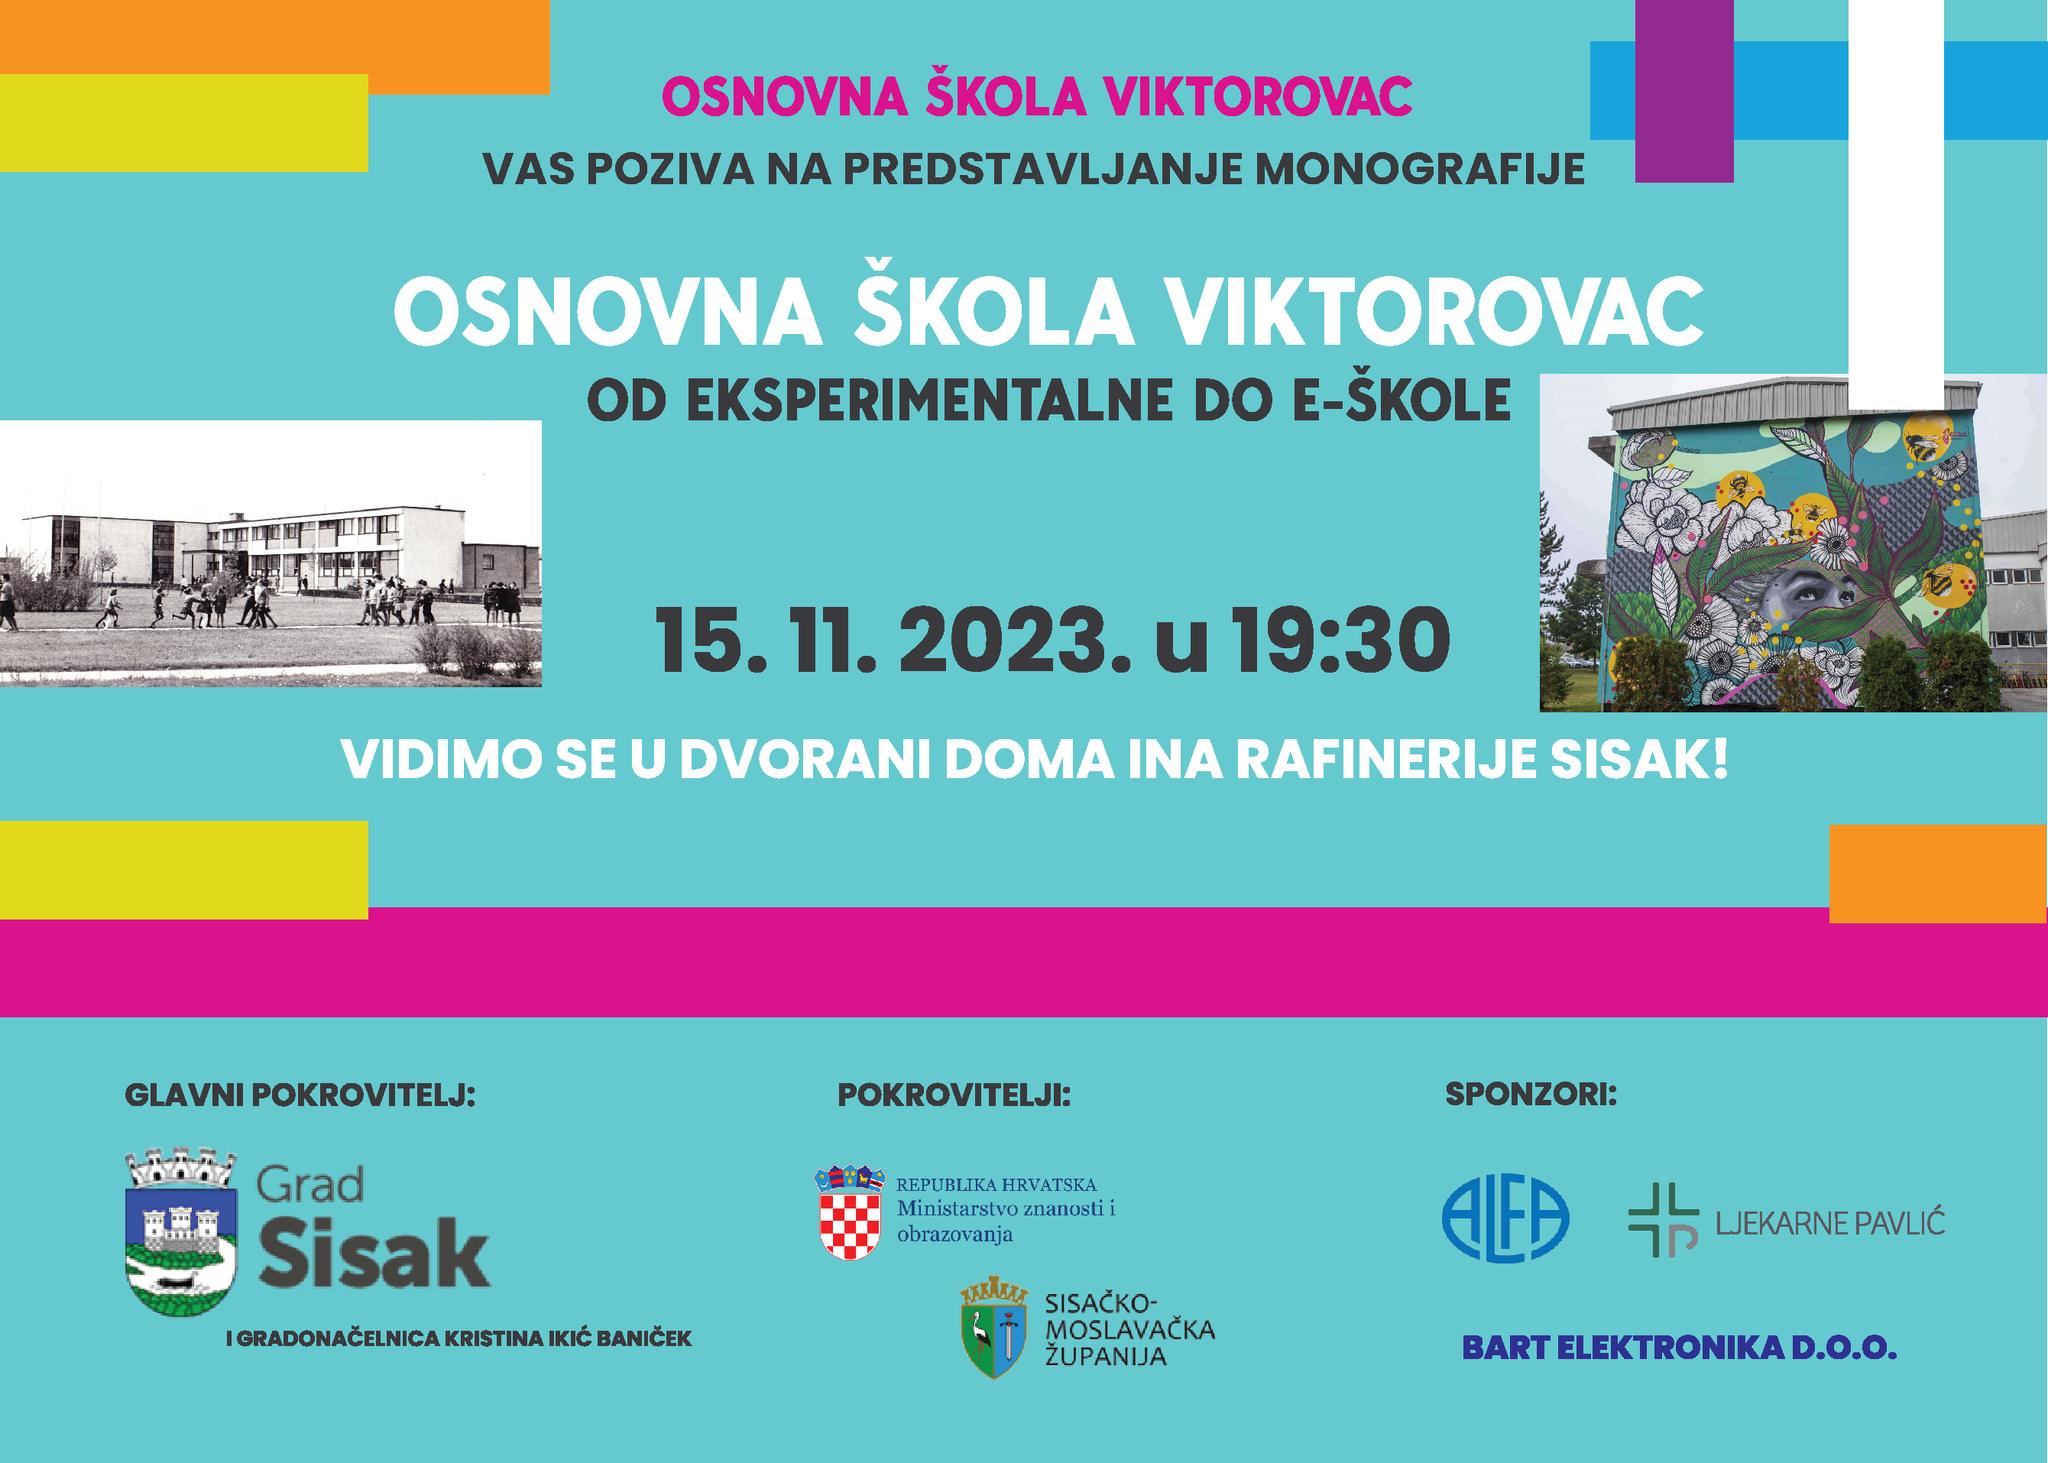 You are currently viewing Monografija OŠ Viktorovac